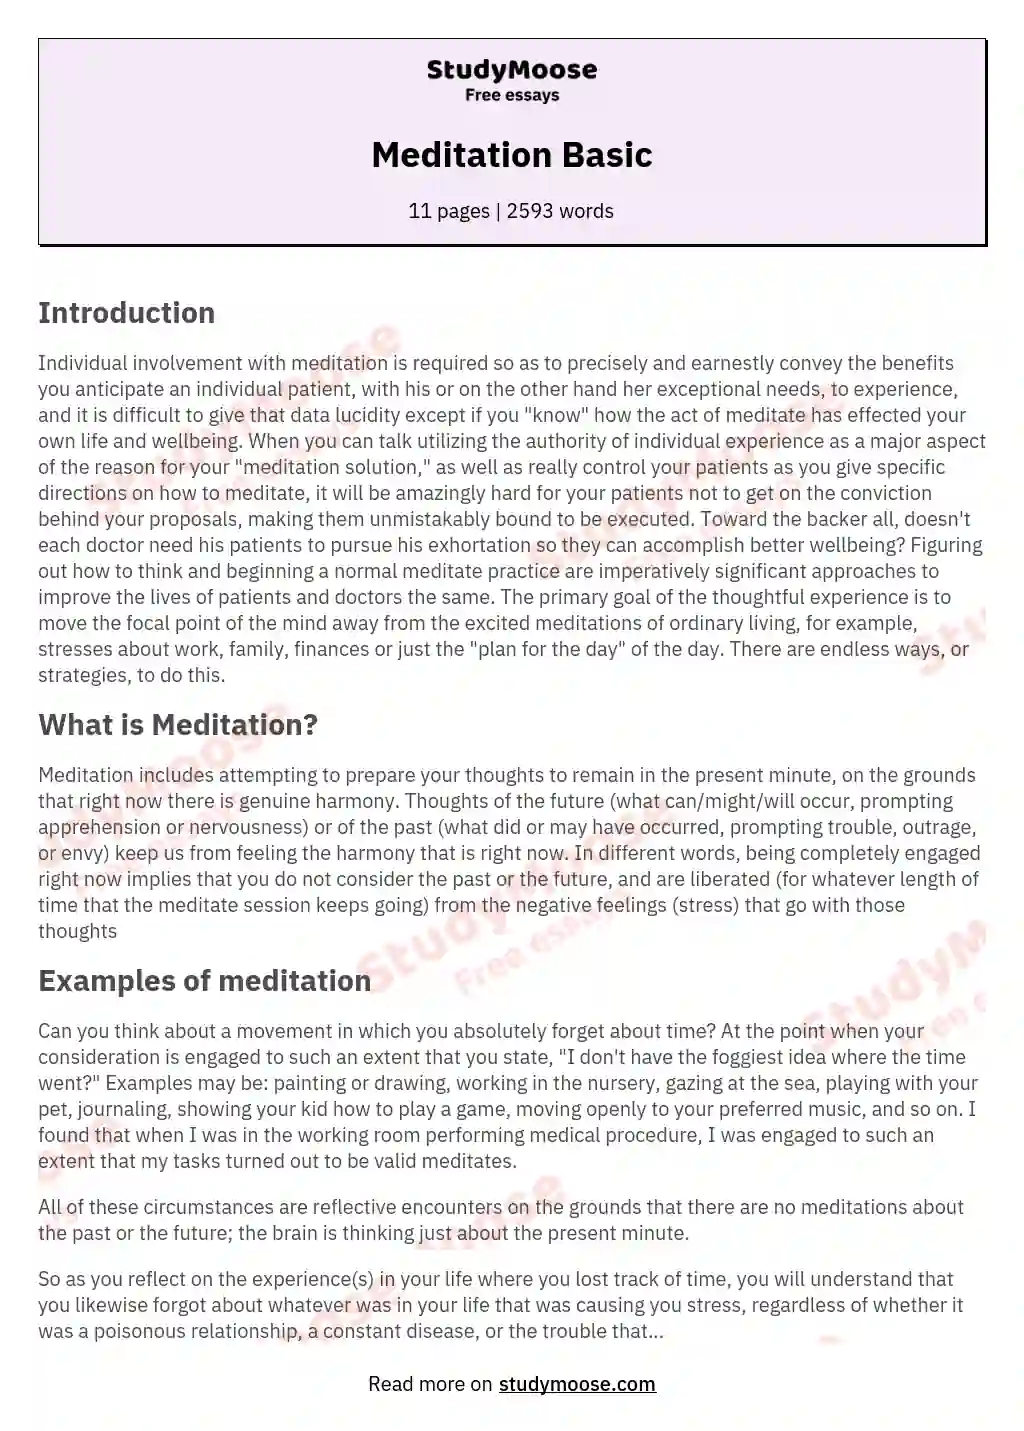 Meditation Basic essay